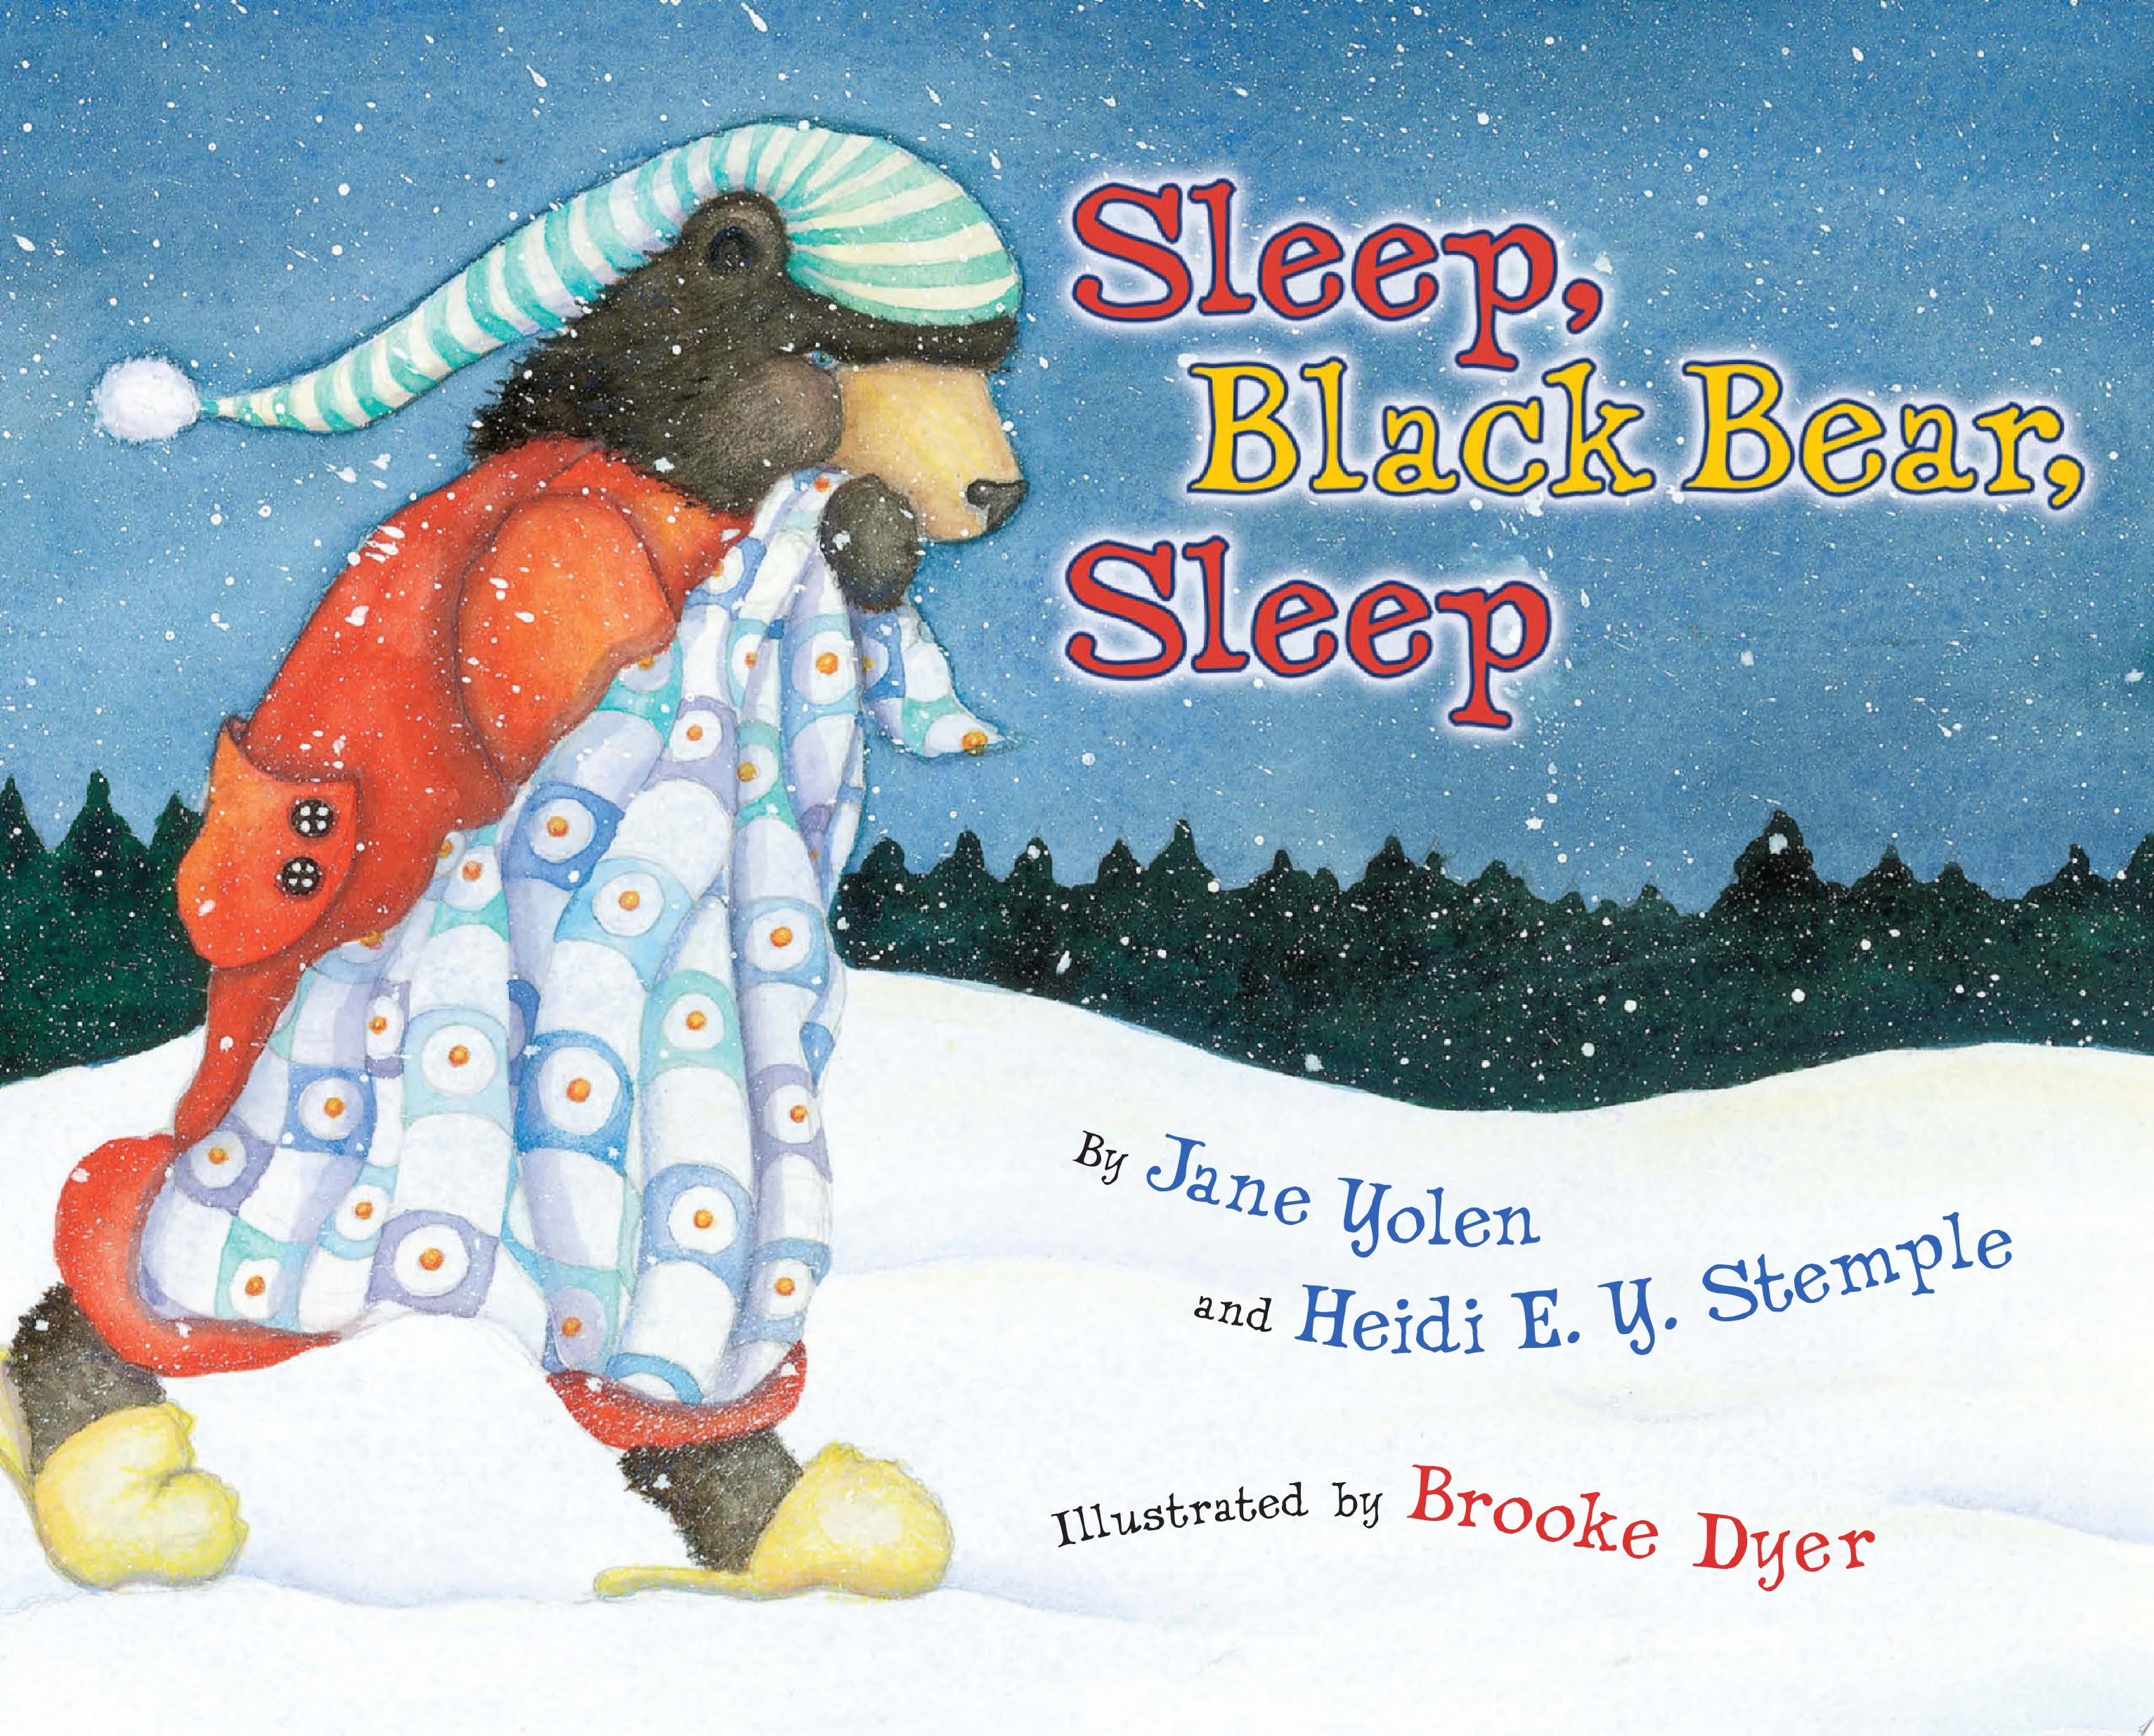 Image for "Sleep, Black Bear, Sleep"